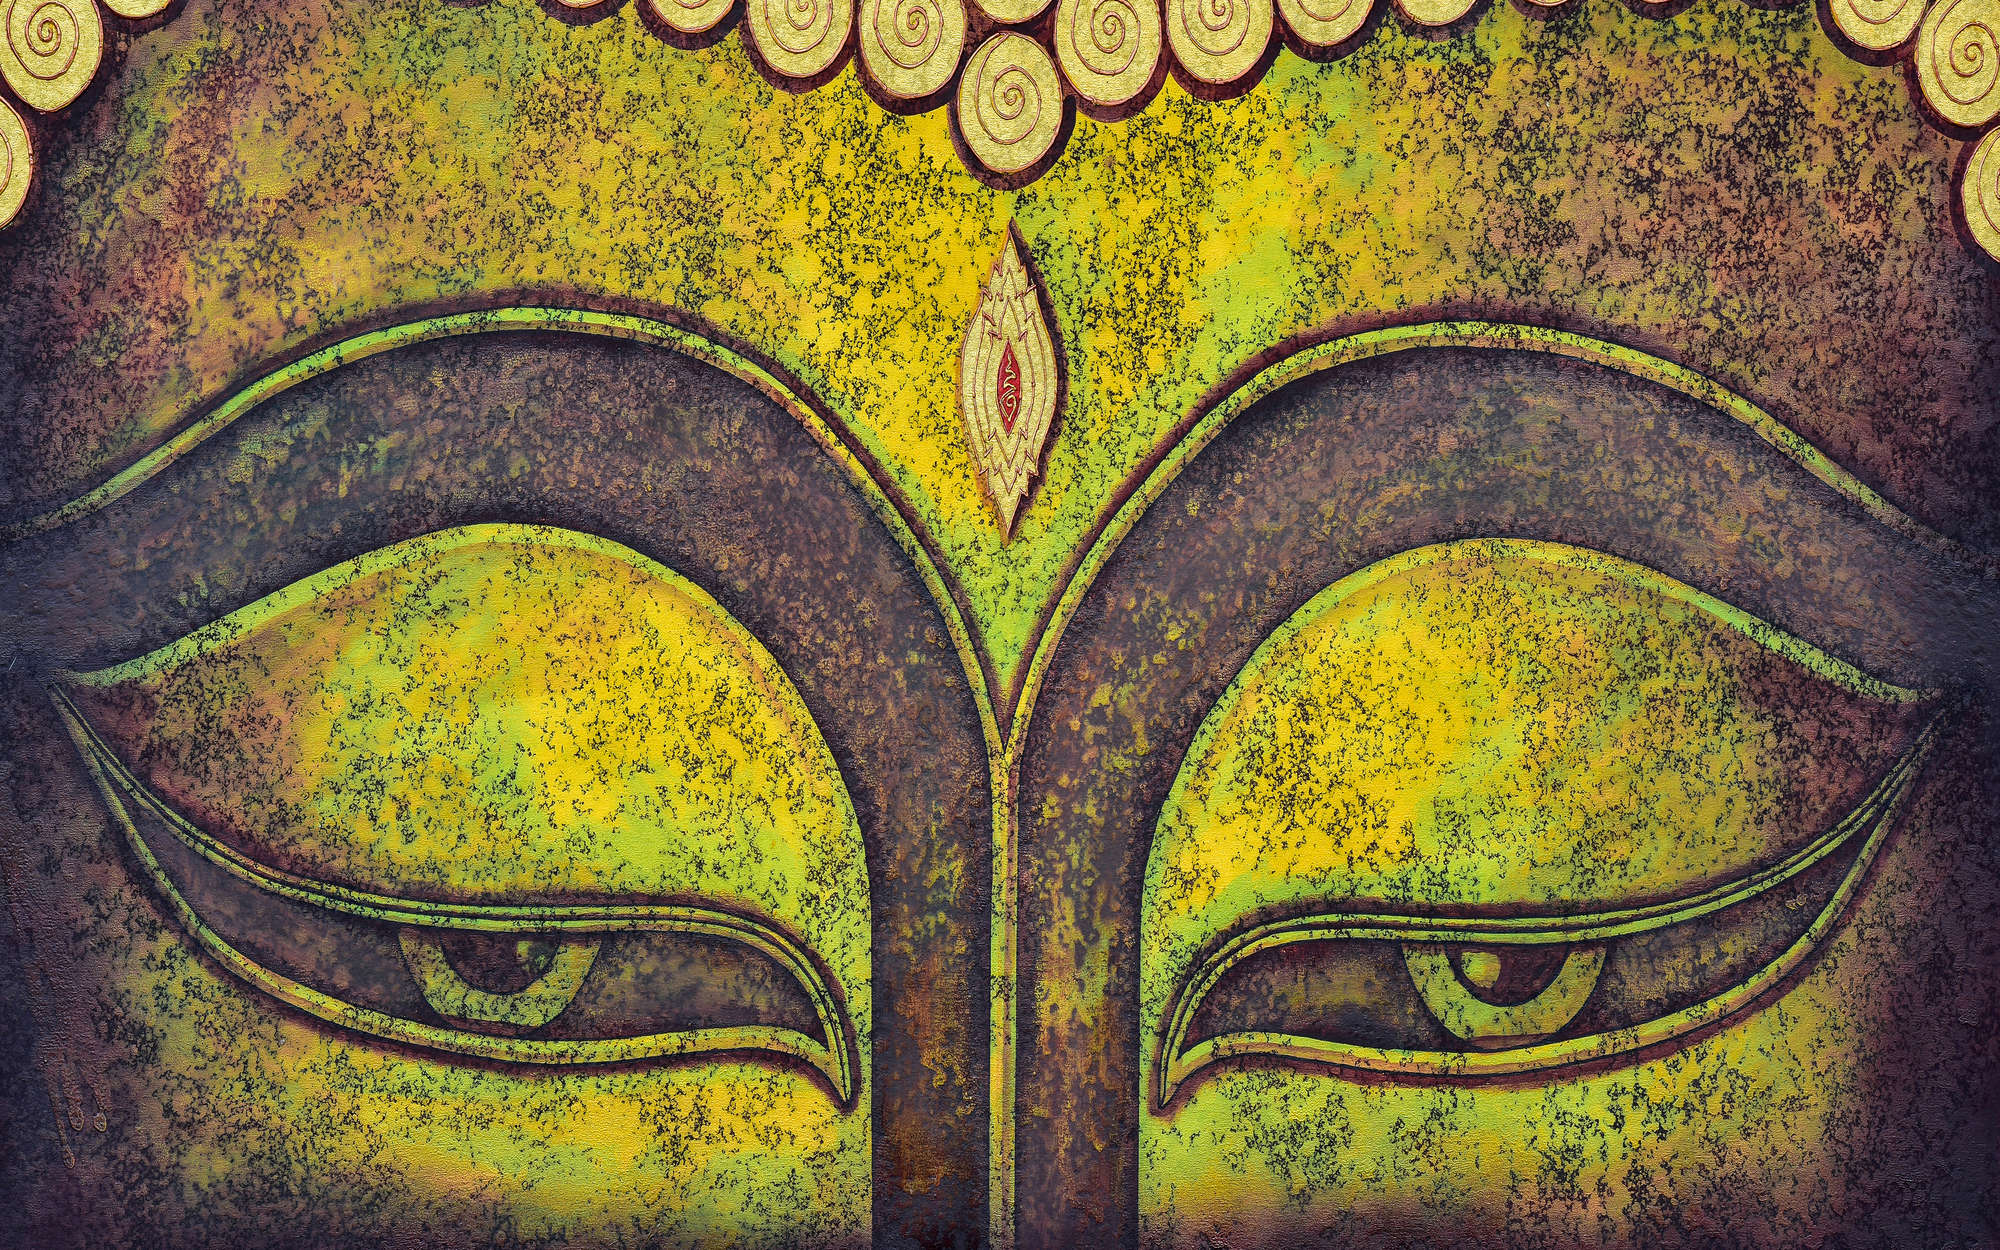             Digital behang detail van Boeddha gezicht - parelmoer glad non-woven
        